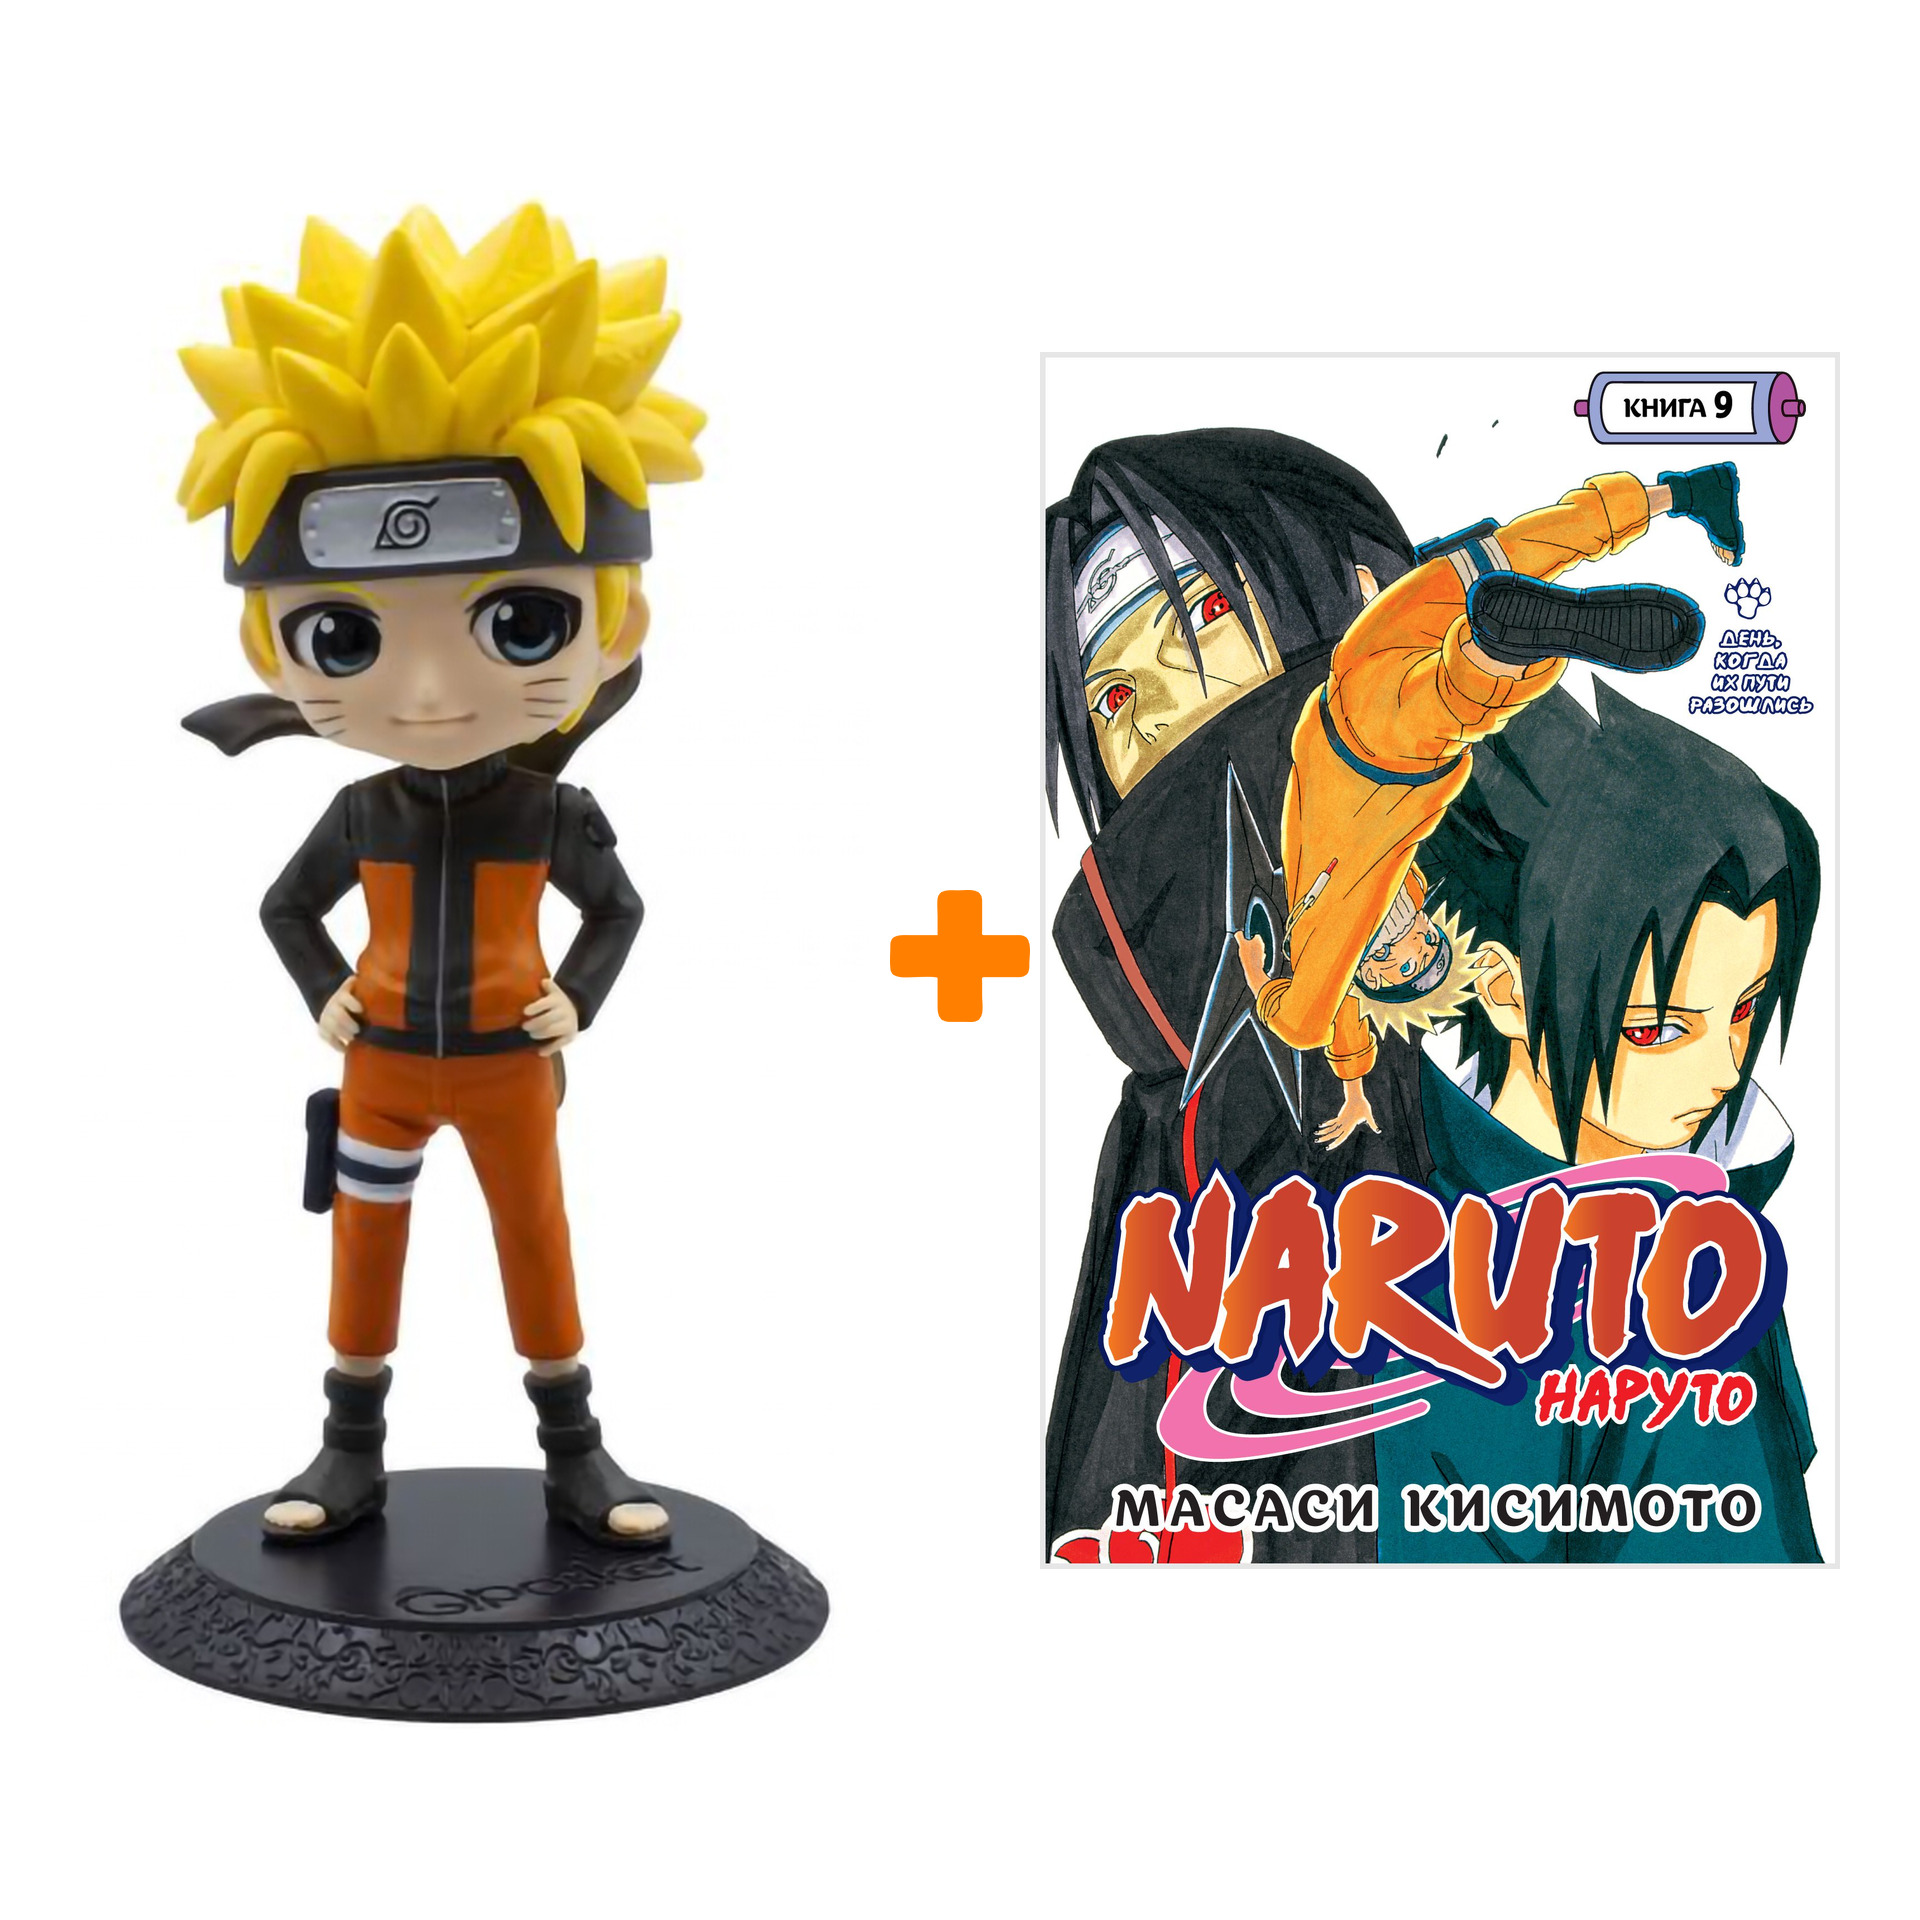 Набор Naruto Shippuden фигурка Naruto Uzumaki + манга Naruto 9 День, когда их пути разошлись